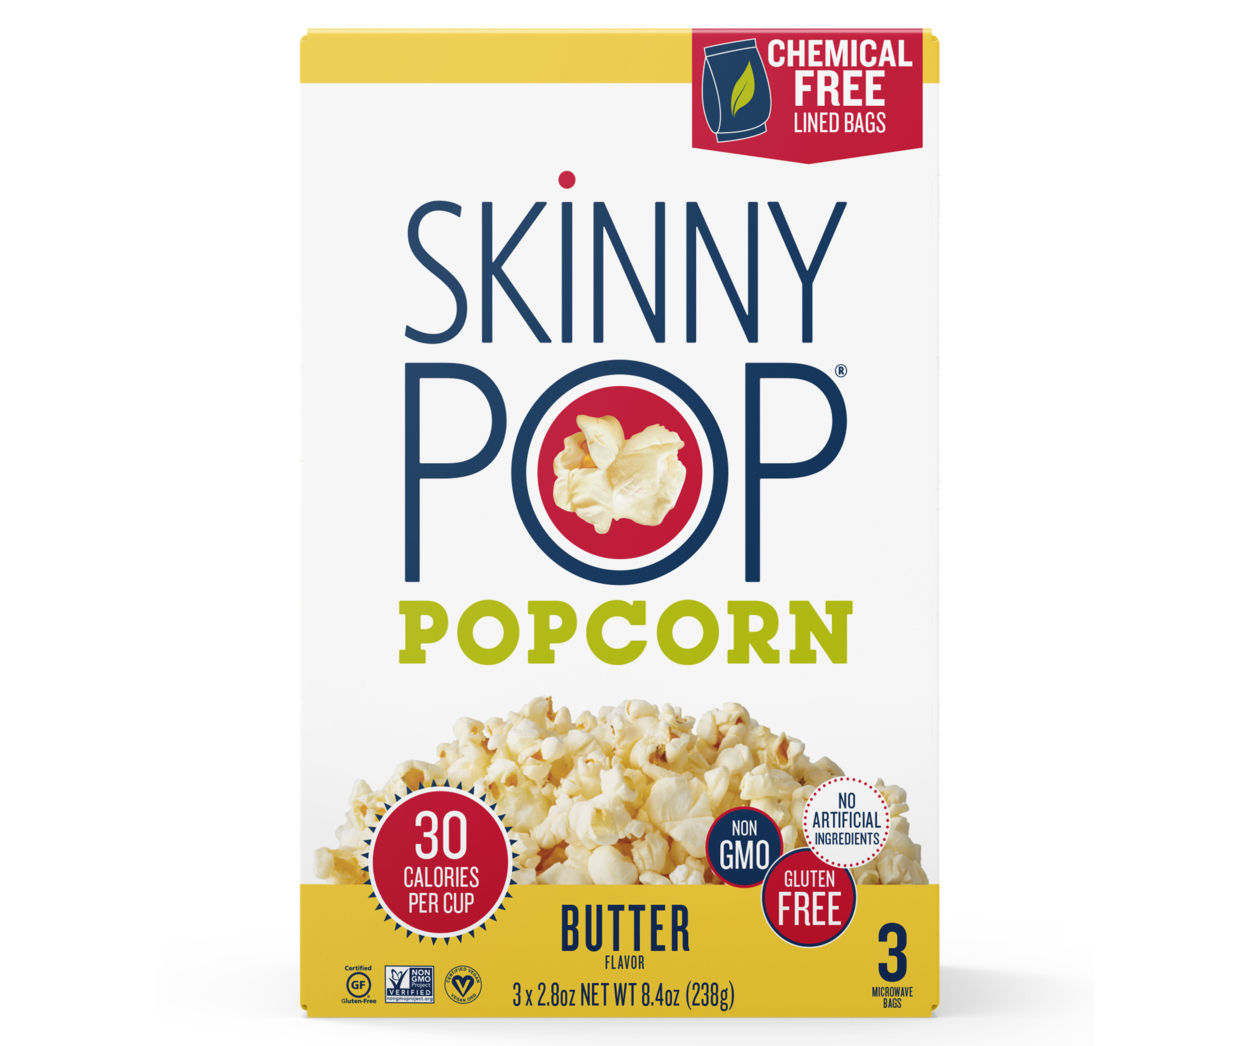 Skinny Pop Butter Microwave Popcorn, 3 pack